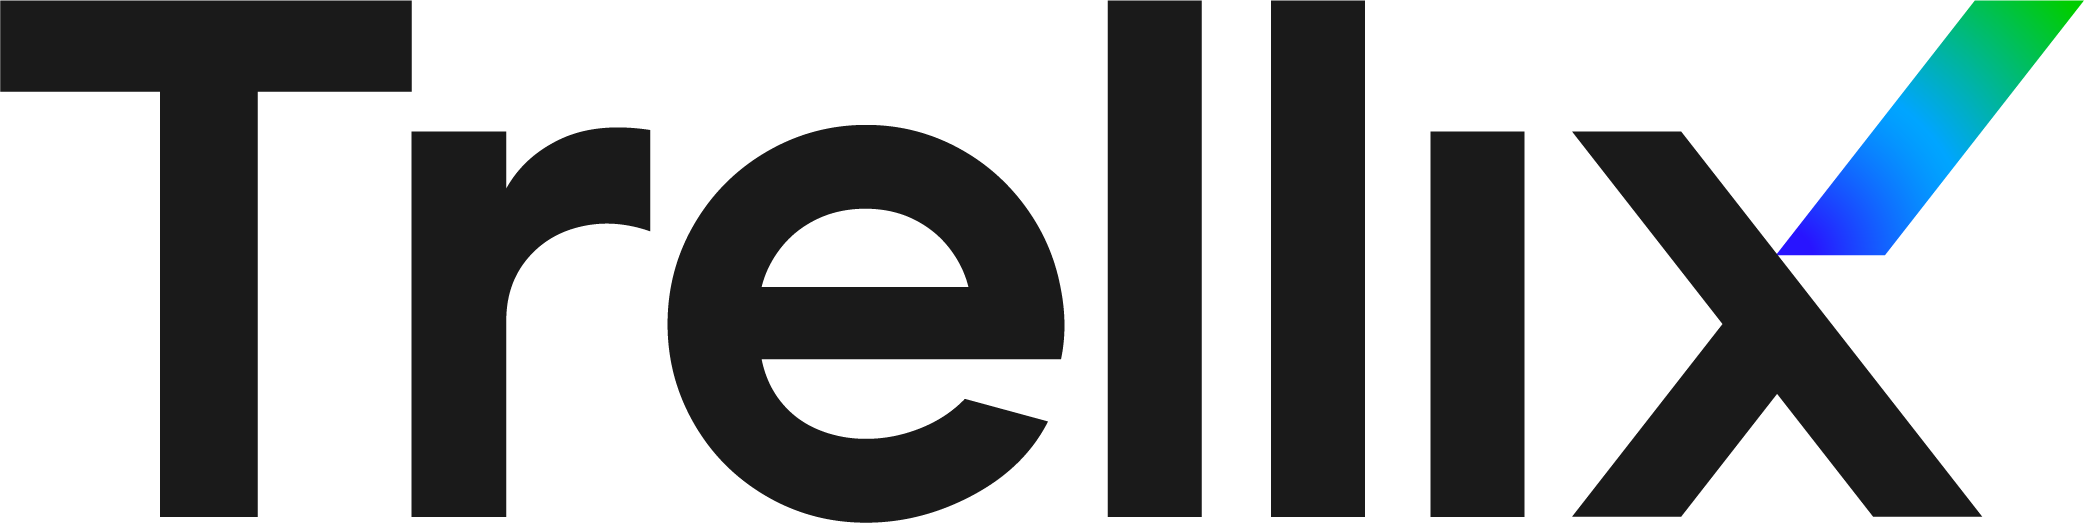 Trellix Logo Main